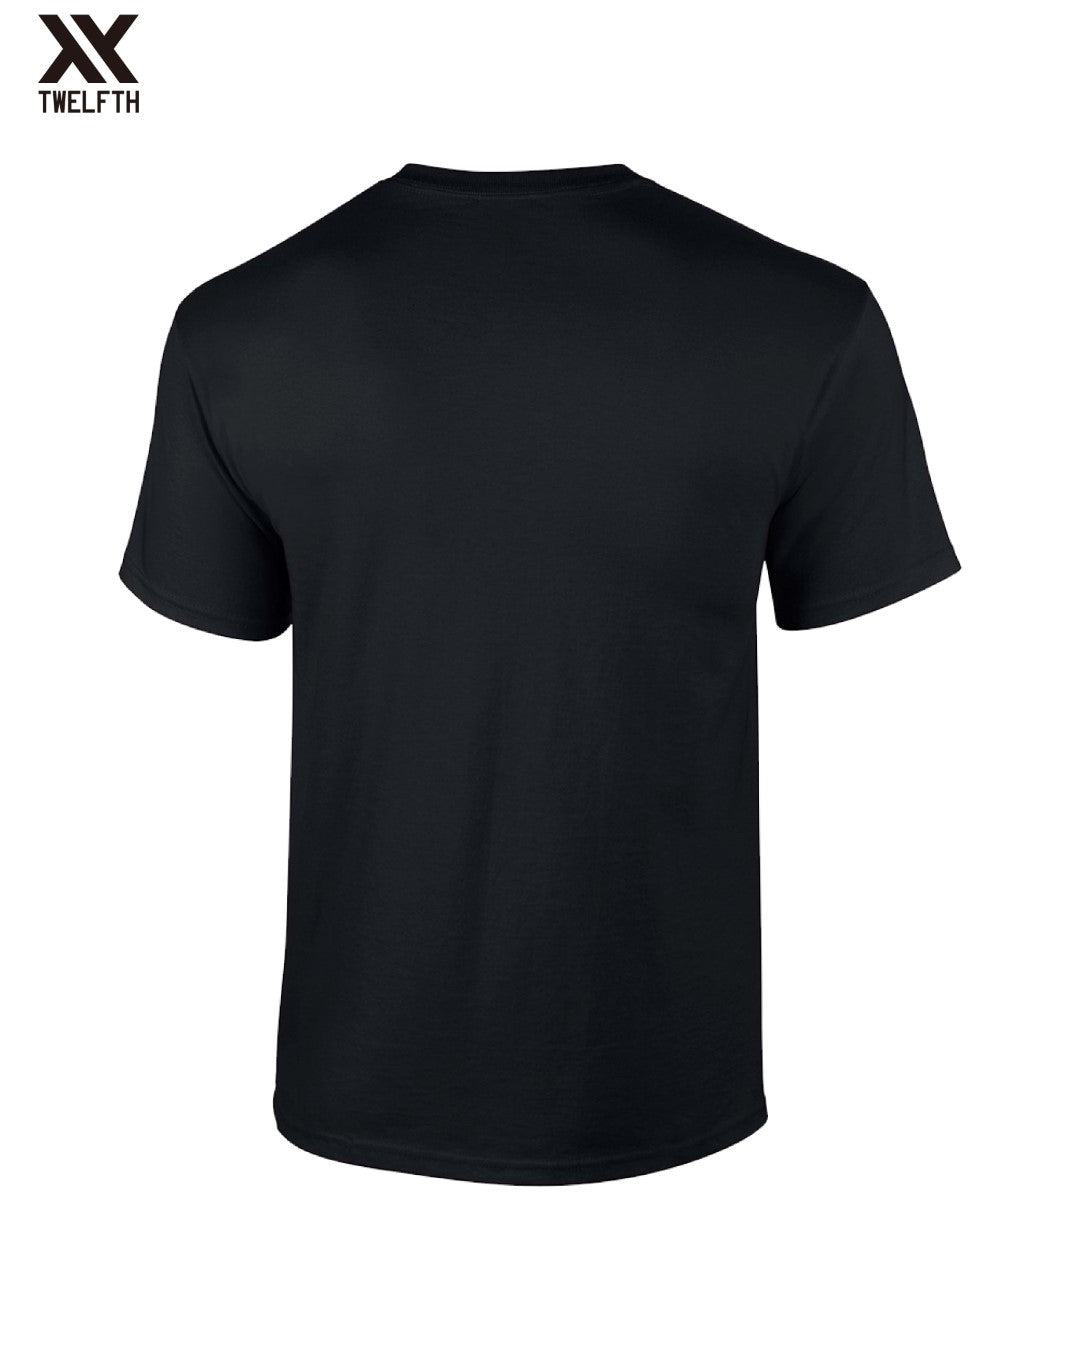 Germany Crest T-Shirt - Mens